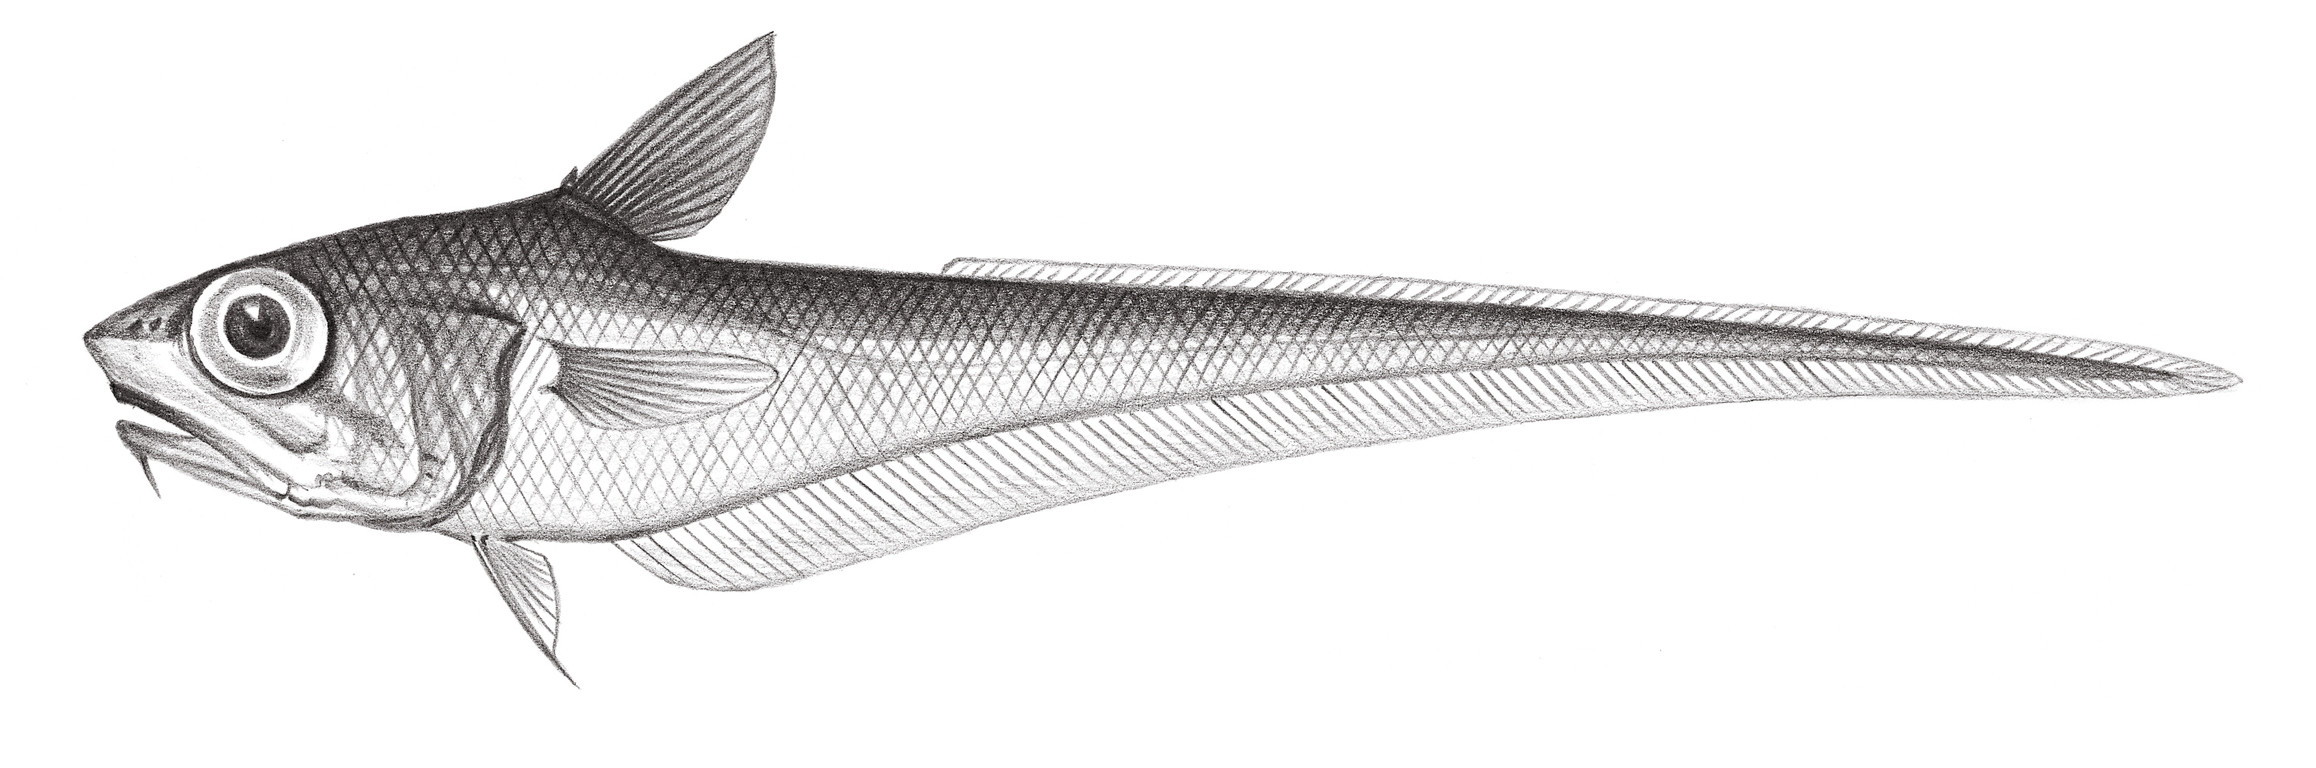 591.	箭齒凹腹鱈 Ventrifossa atherodon (Gilbert & Cramer, 1897)